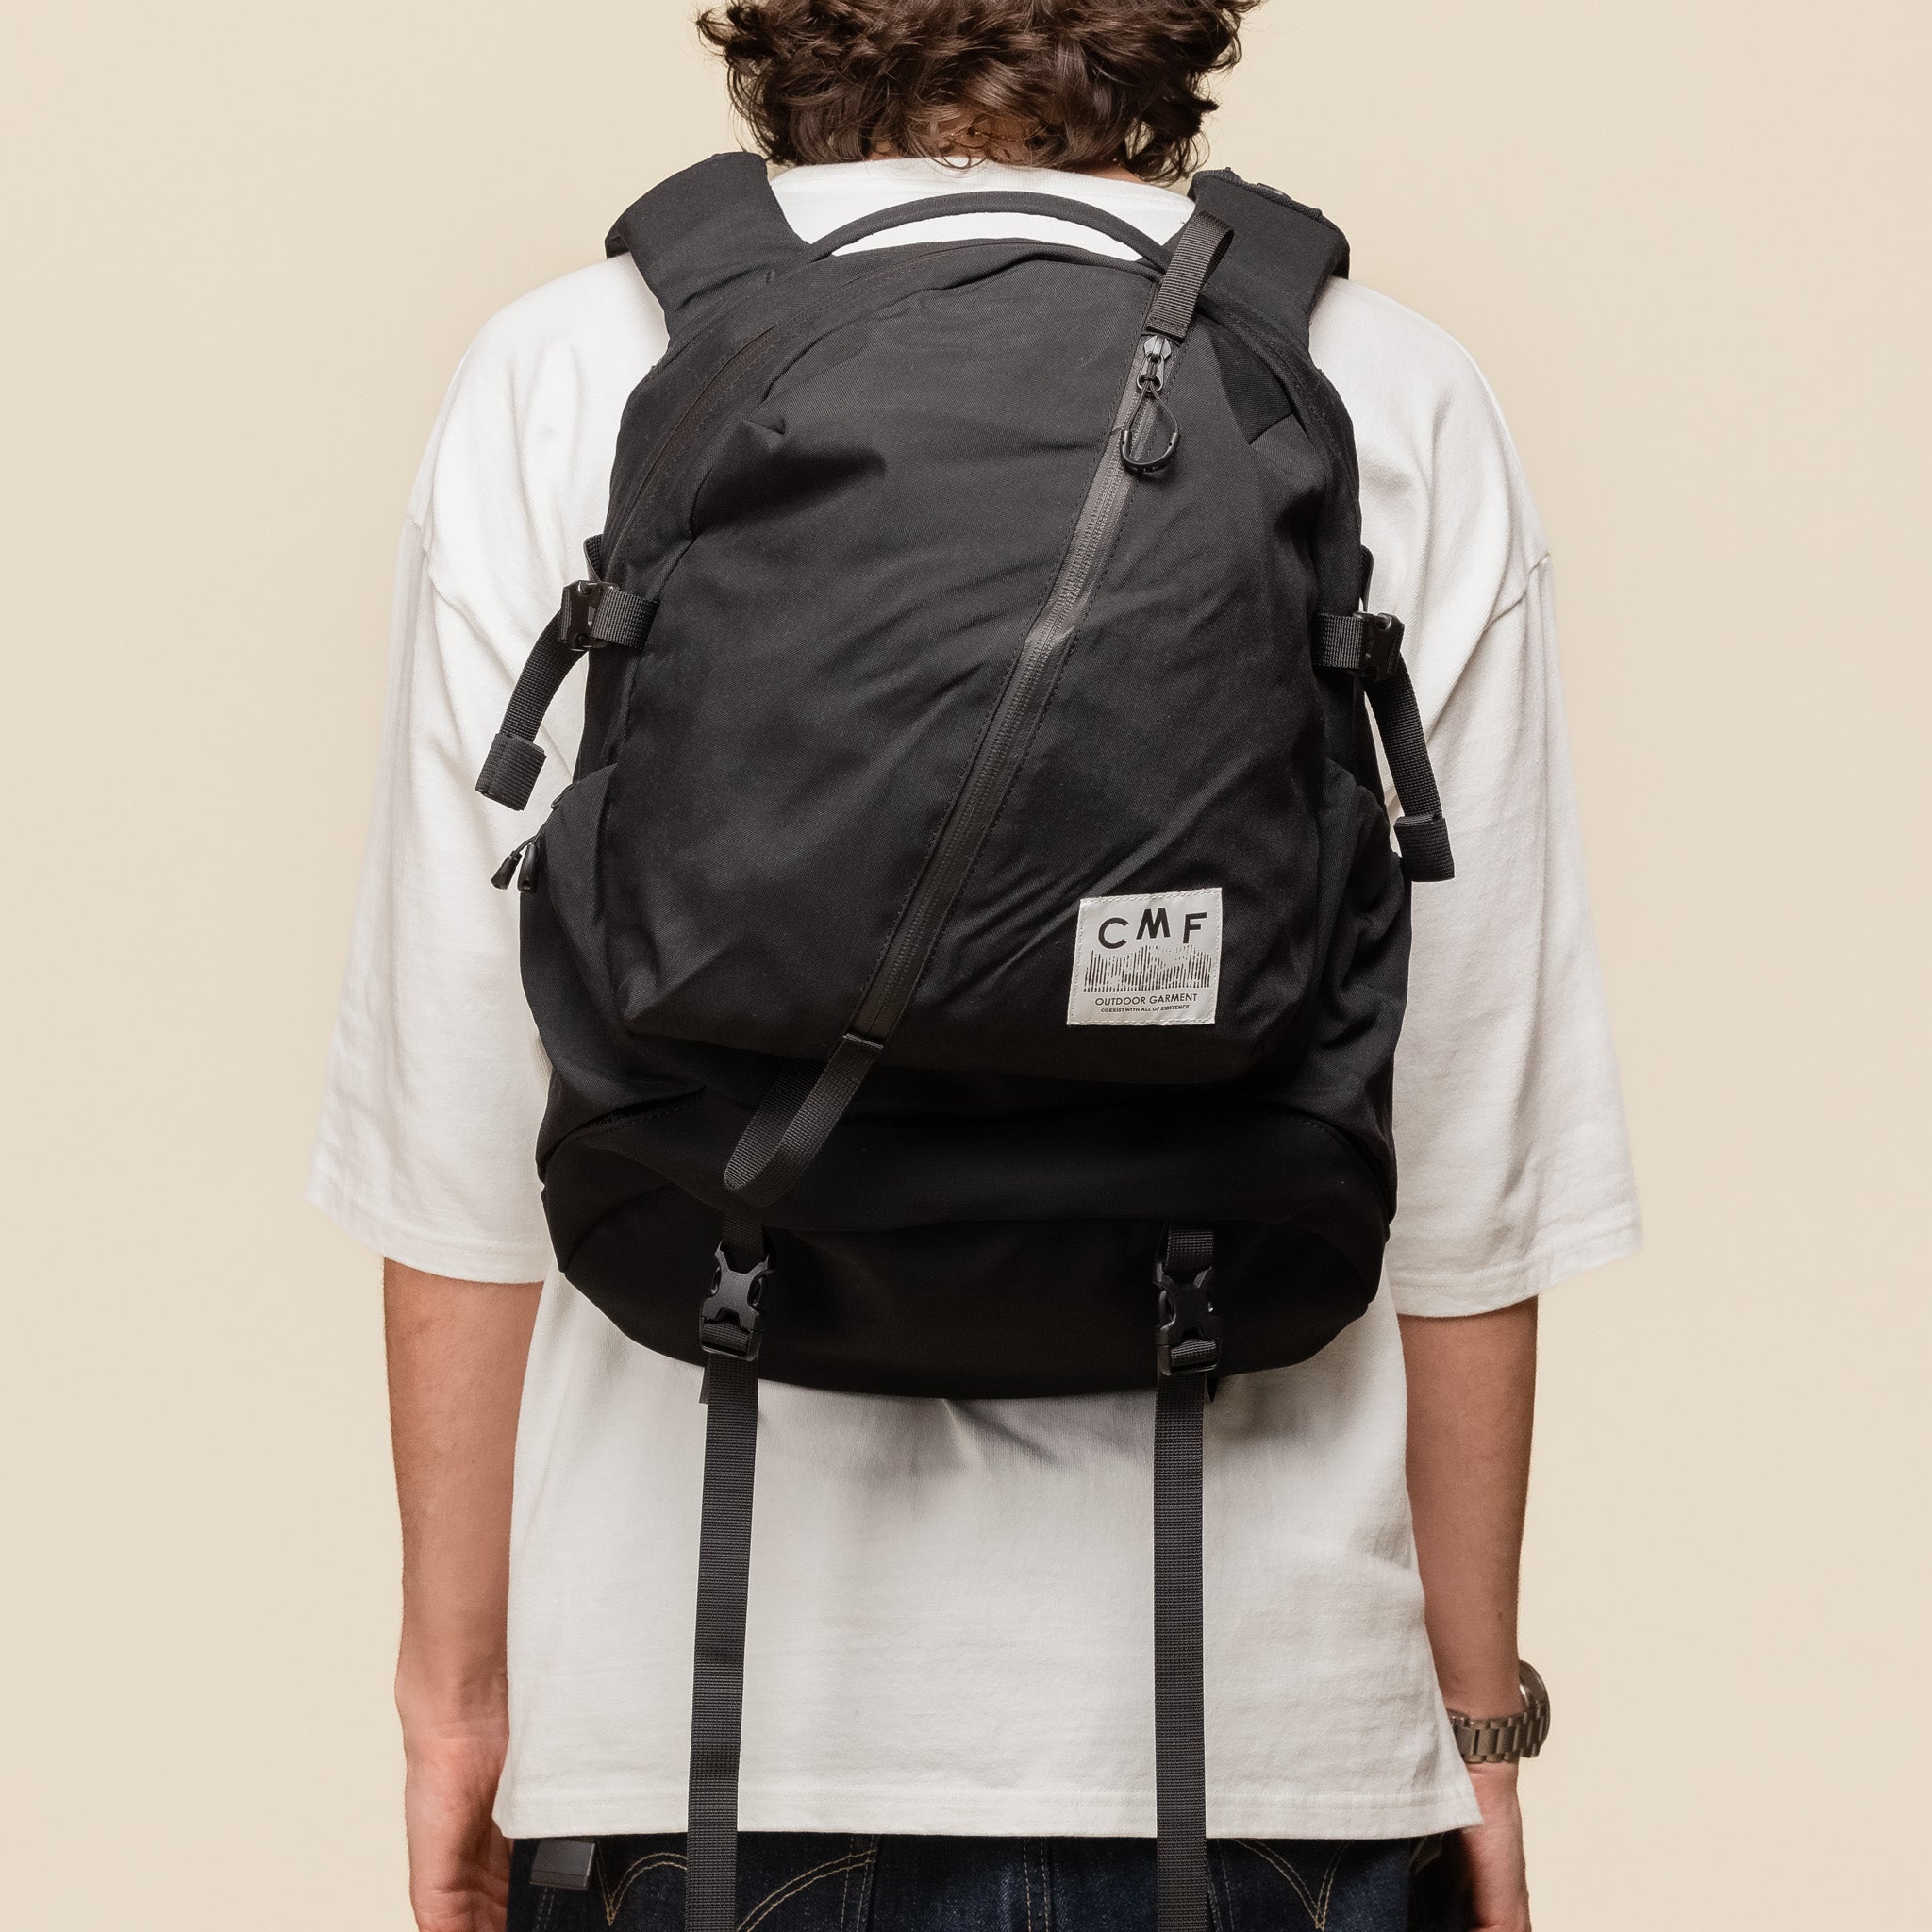 CMF Comfy Outdoor Garment - Weekenderz 20 Smooth Nylon Backpack - Black